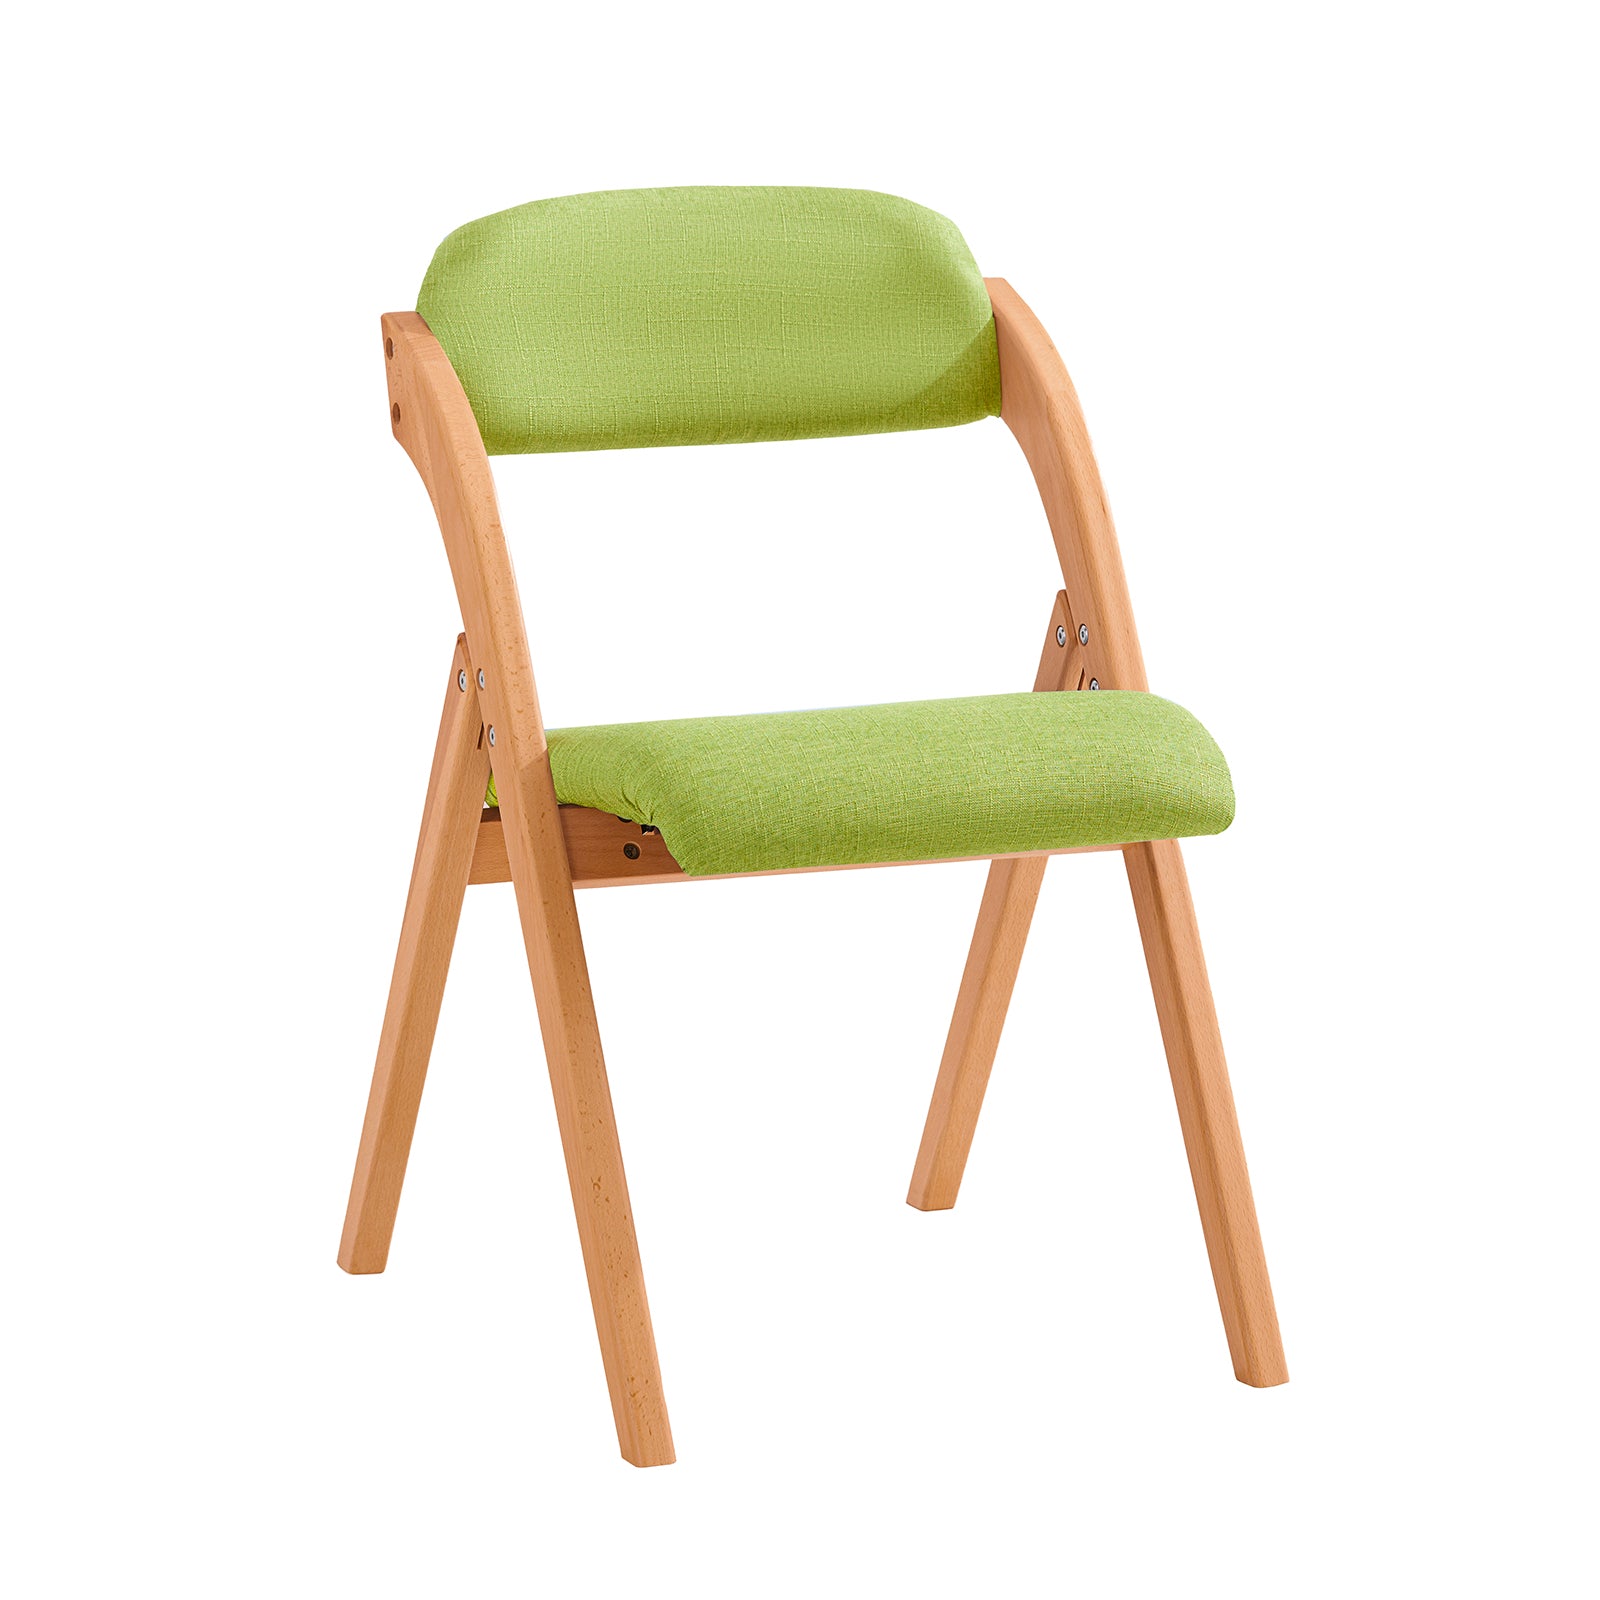 SoBuy madera acolchada silla comedor plegable, Color Beige, FST40